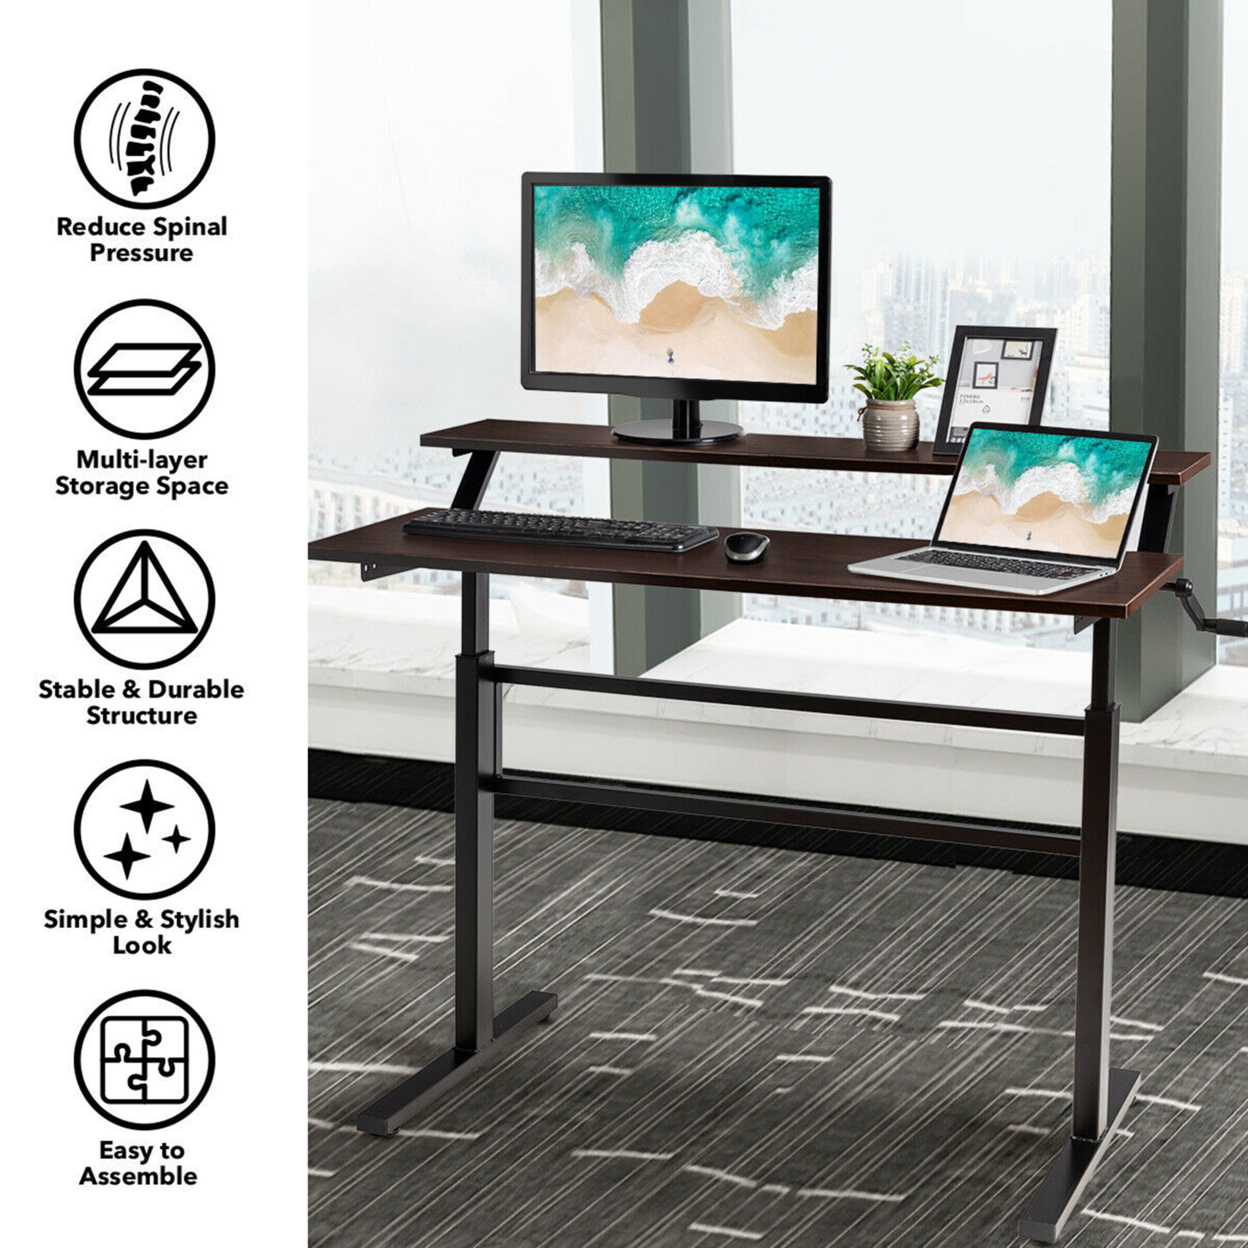 Standing Desk Crank Adjustable Sit To Stand Workstation With Monitor Shelf - Black